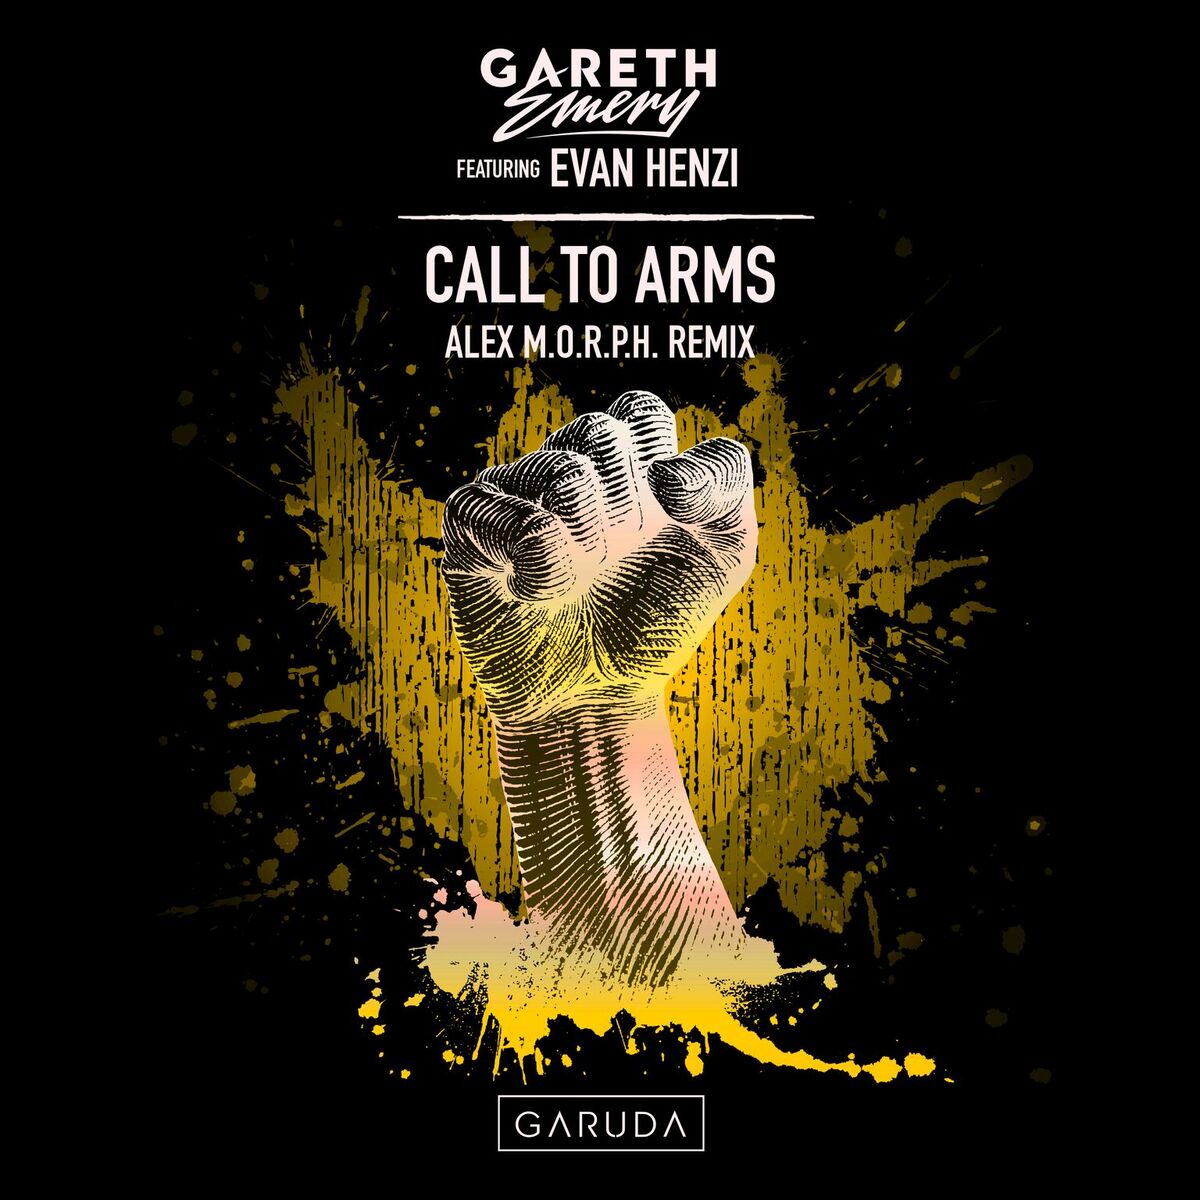 Gareth Emery feat. Evan Henzi presents Call To Arms (Alex M.O.R.P.H. Remix) on Garuda / Armada Music